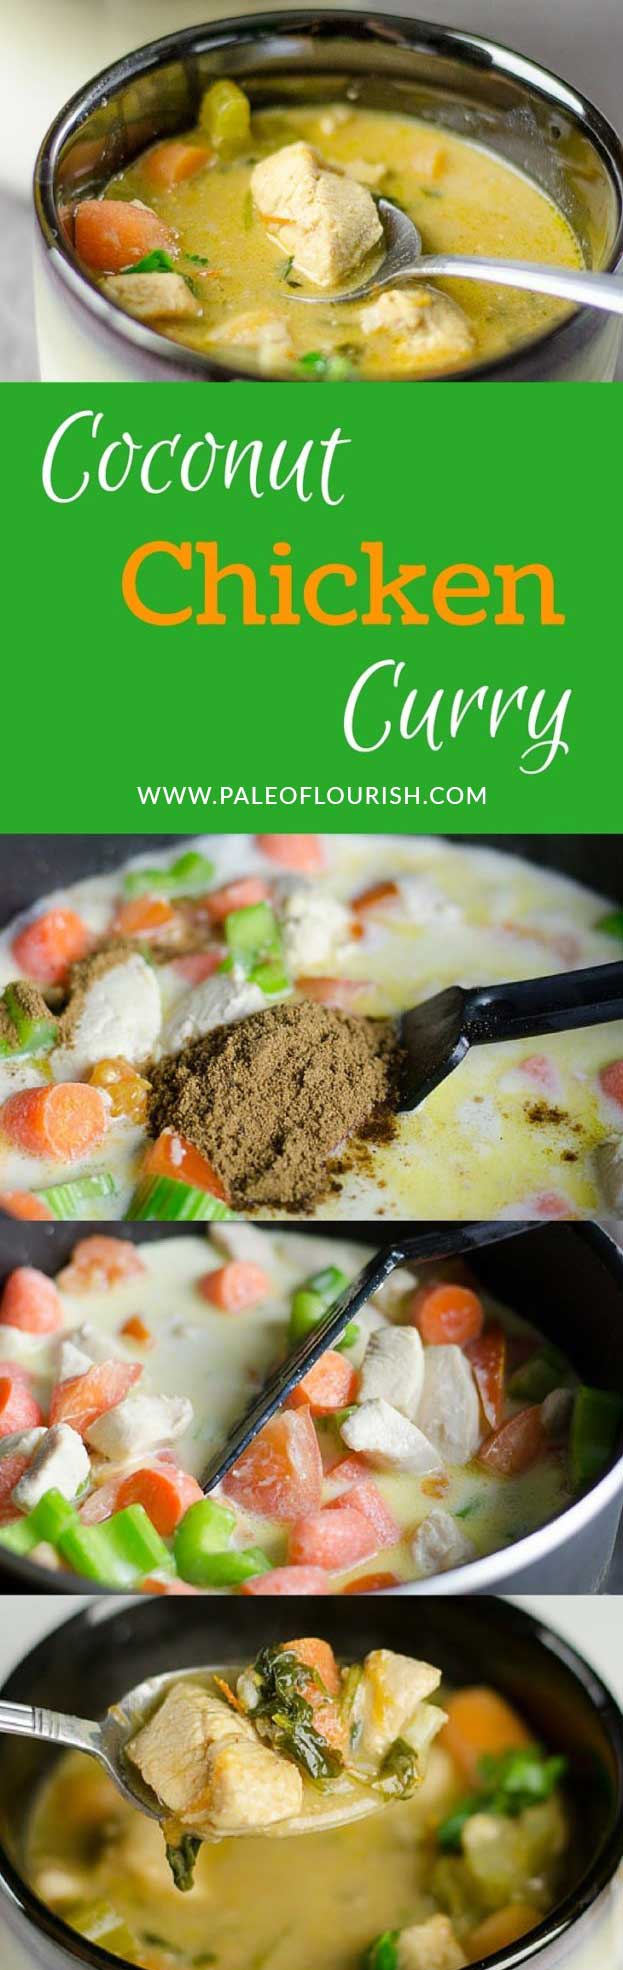 Coconut Chicken Curry #paleo #recipes #gluten-free https://paleoflourish.com/coconut-chicken-curry/